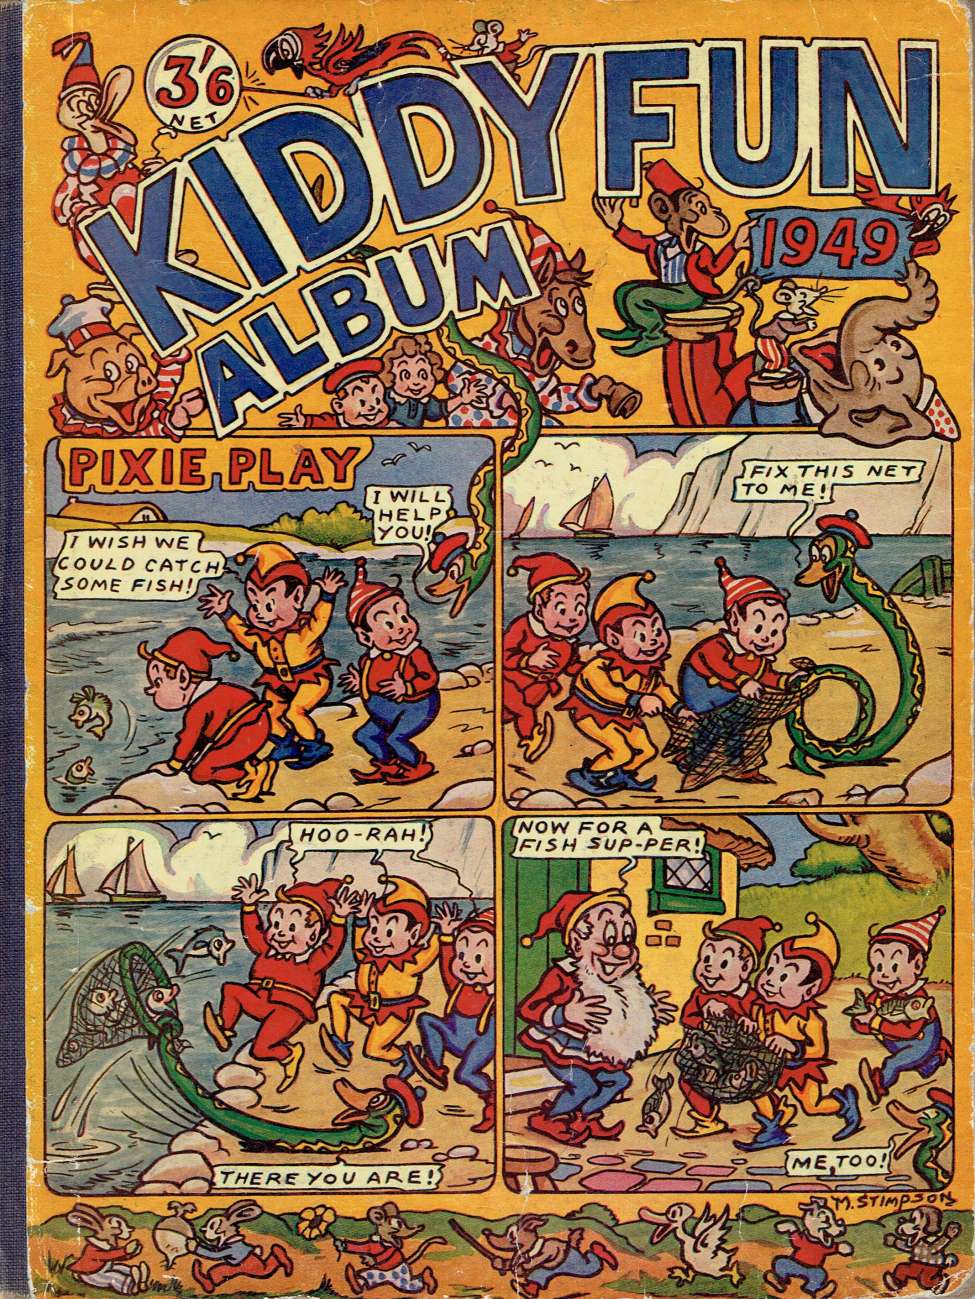 Book Cover For Kiddyfun Album 1949